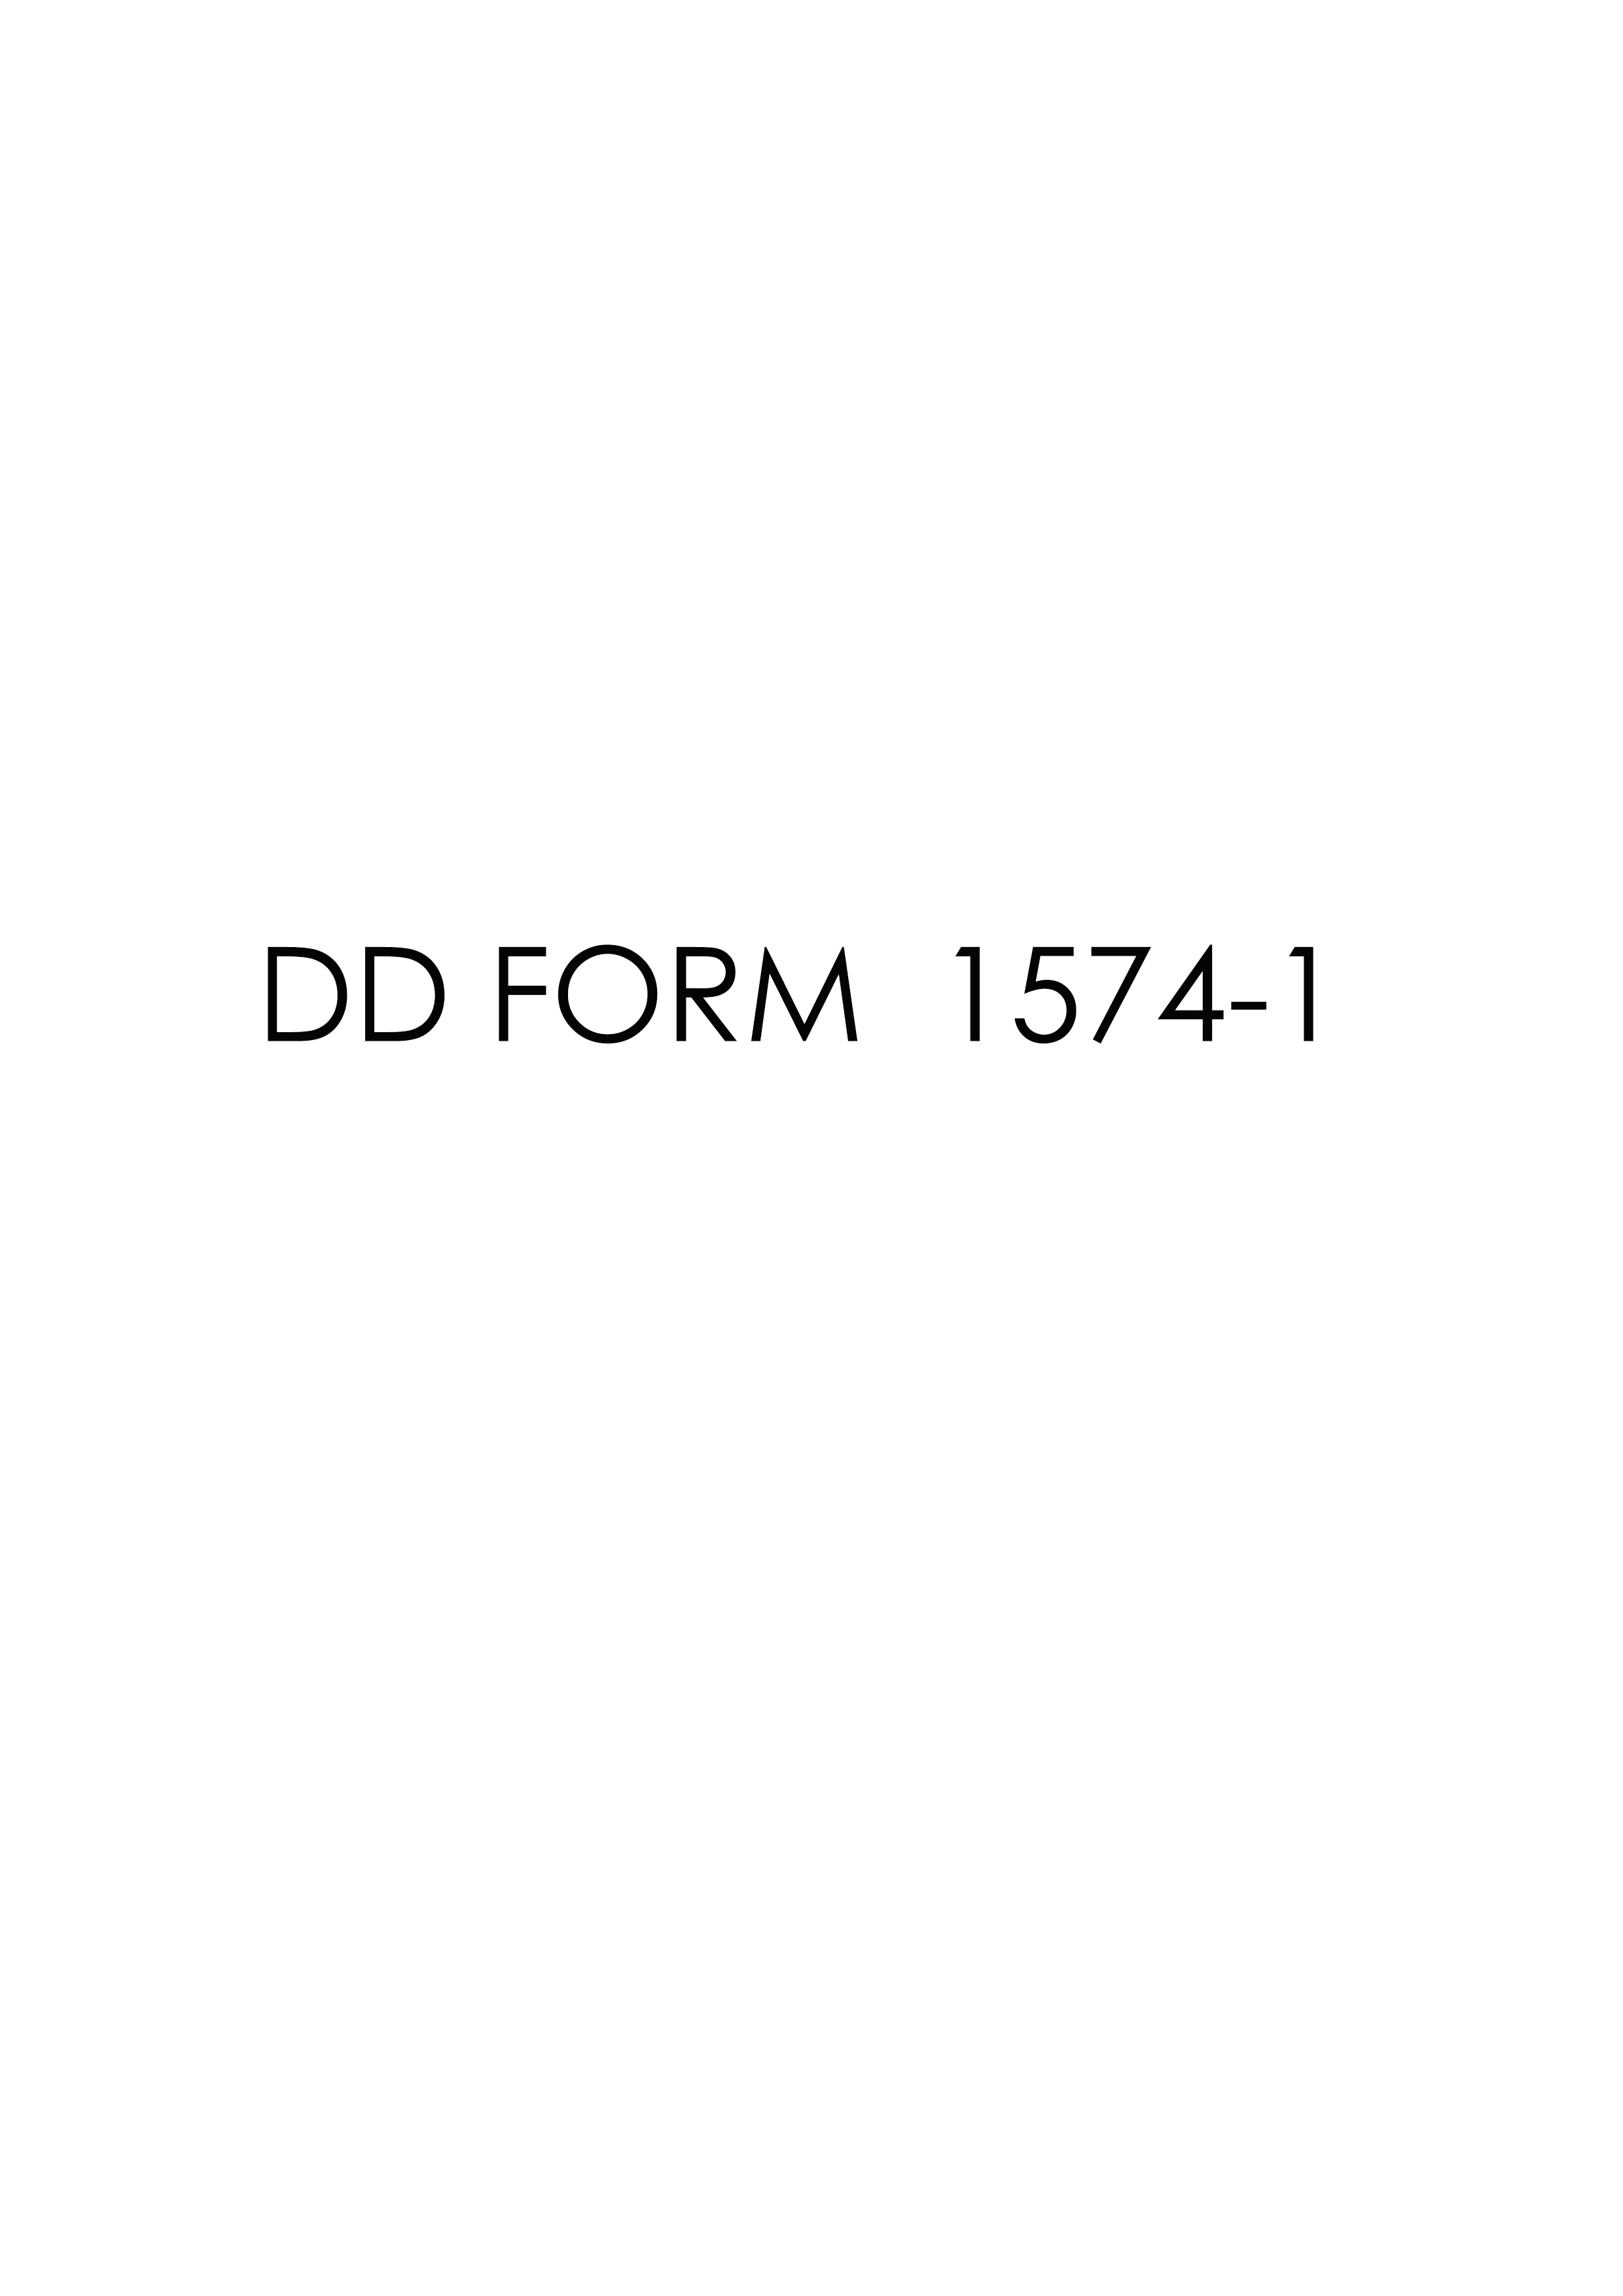 Download dd form 1574-1